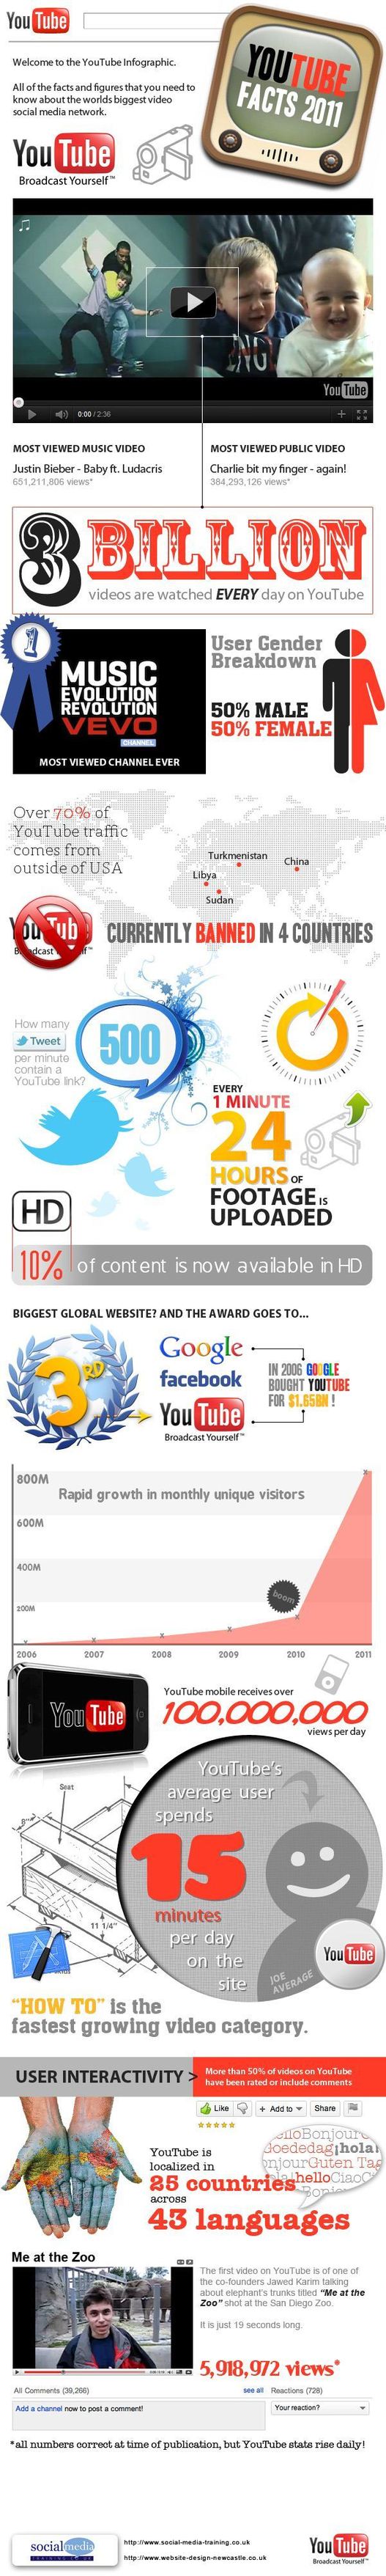 Youtube - Les stats 2011 en 1 image